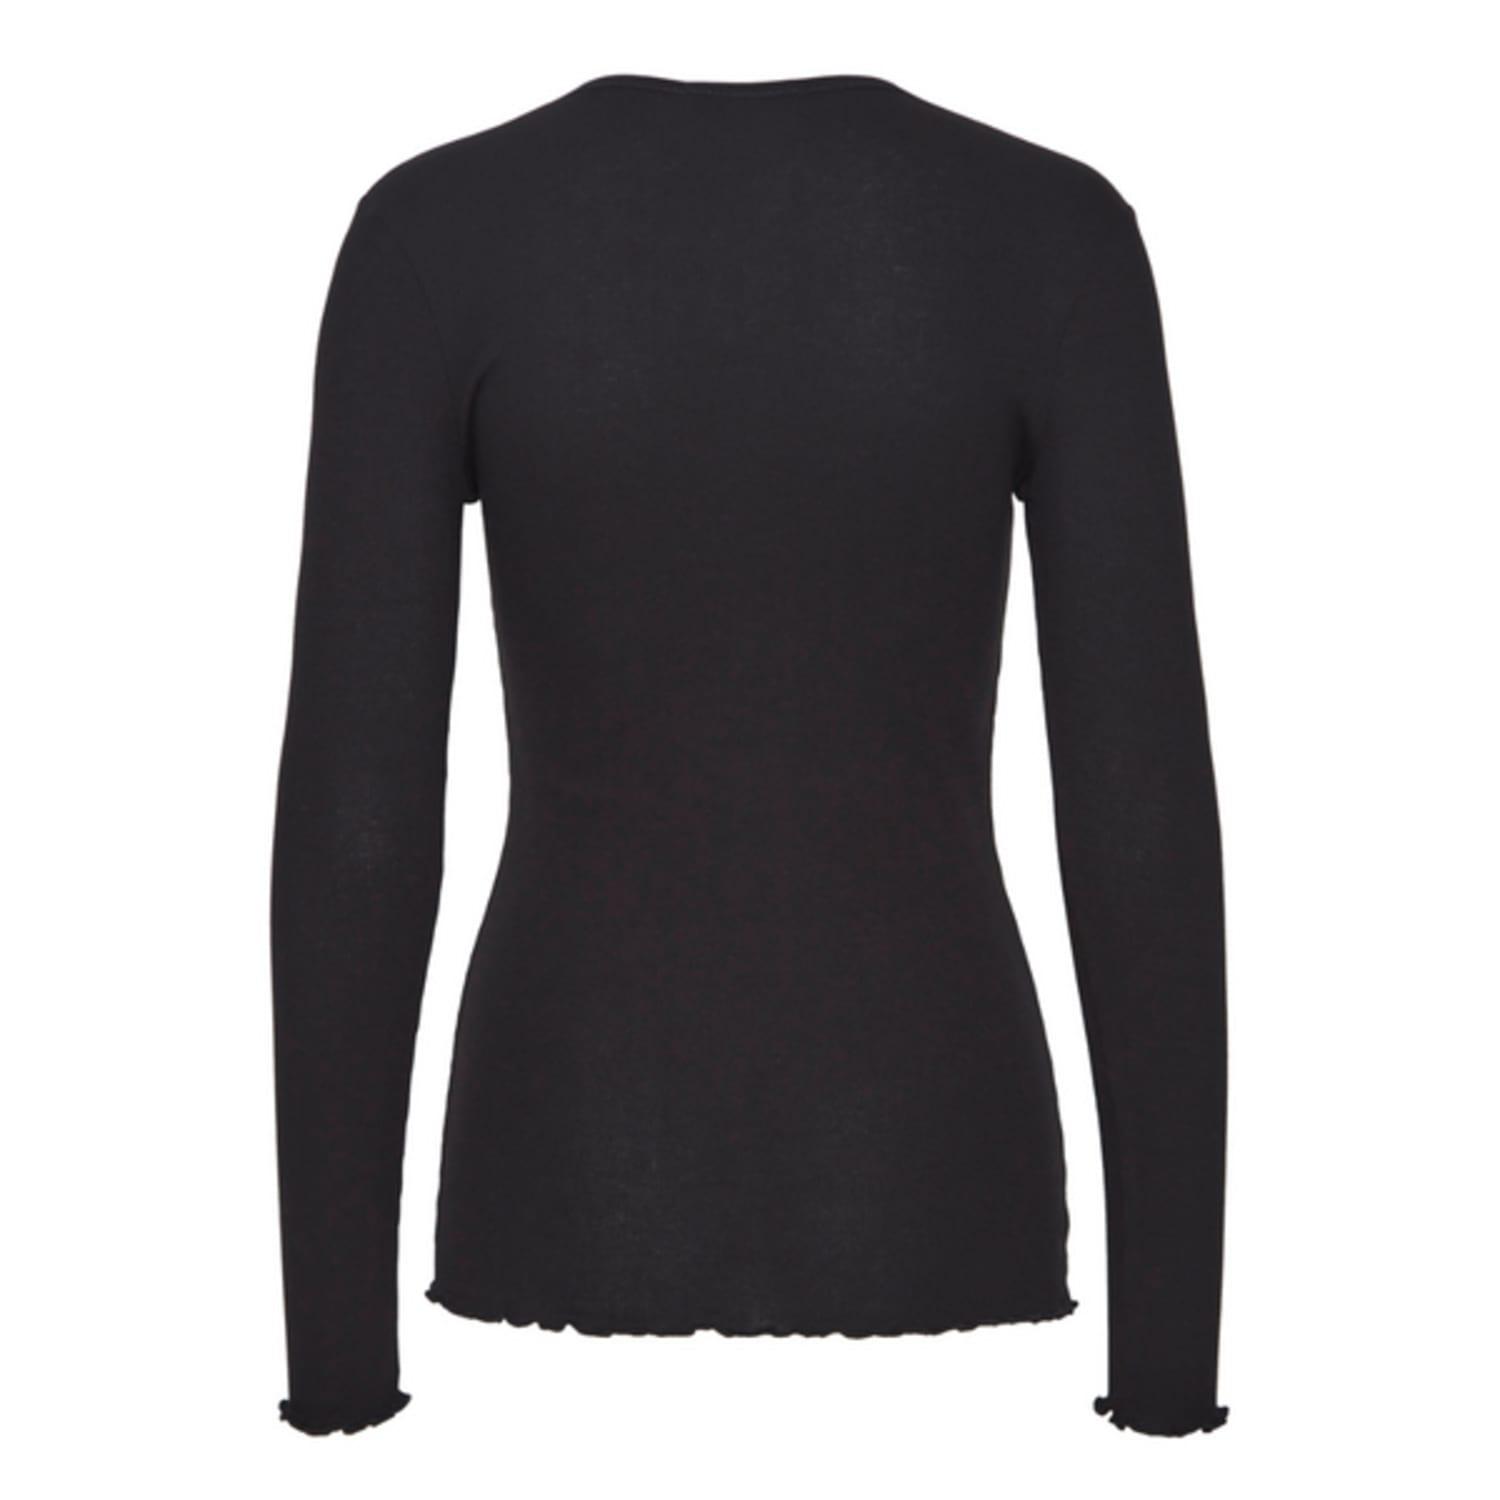 Fransa Hizamond Long Sleeved T-shirt Black Lyst in 